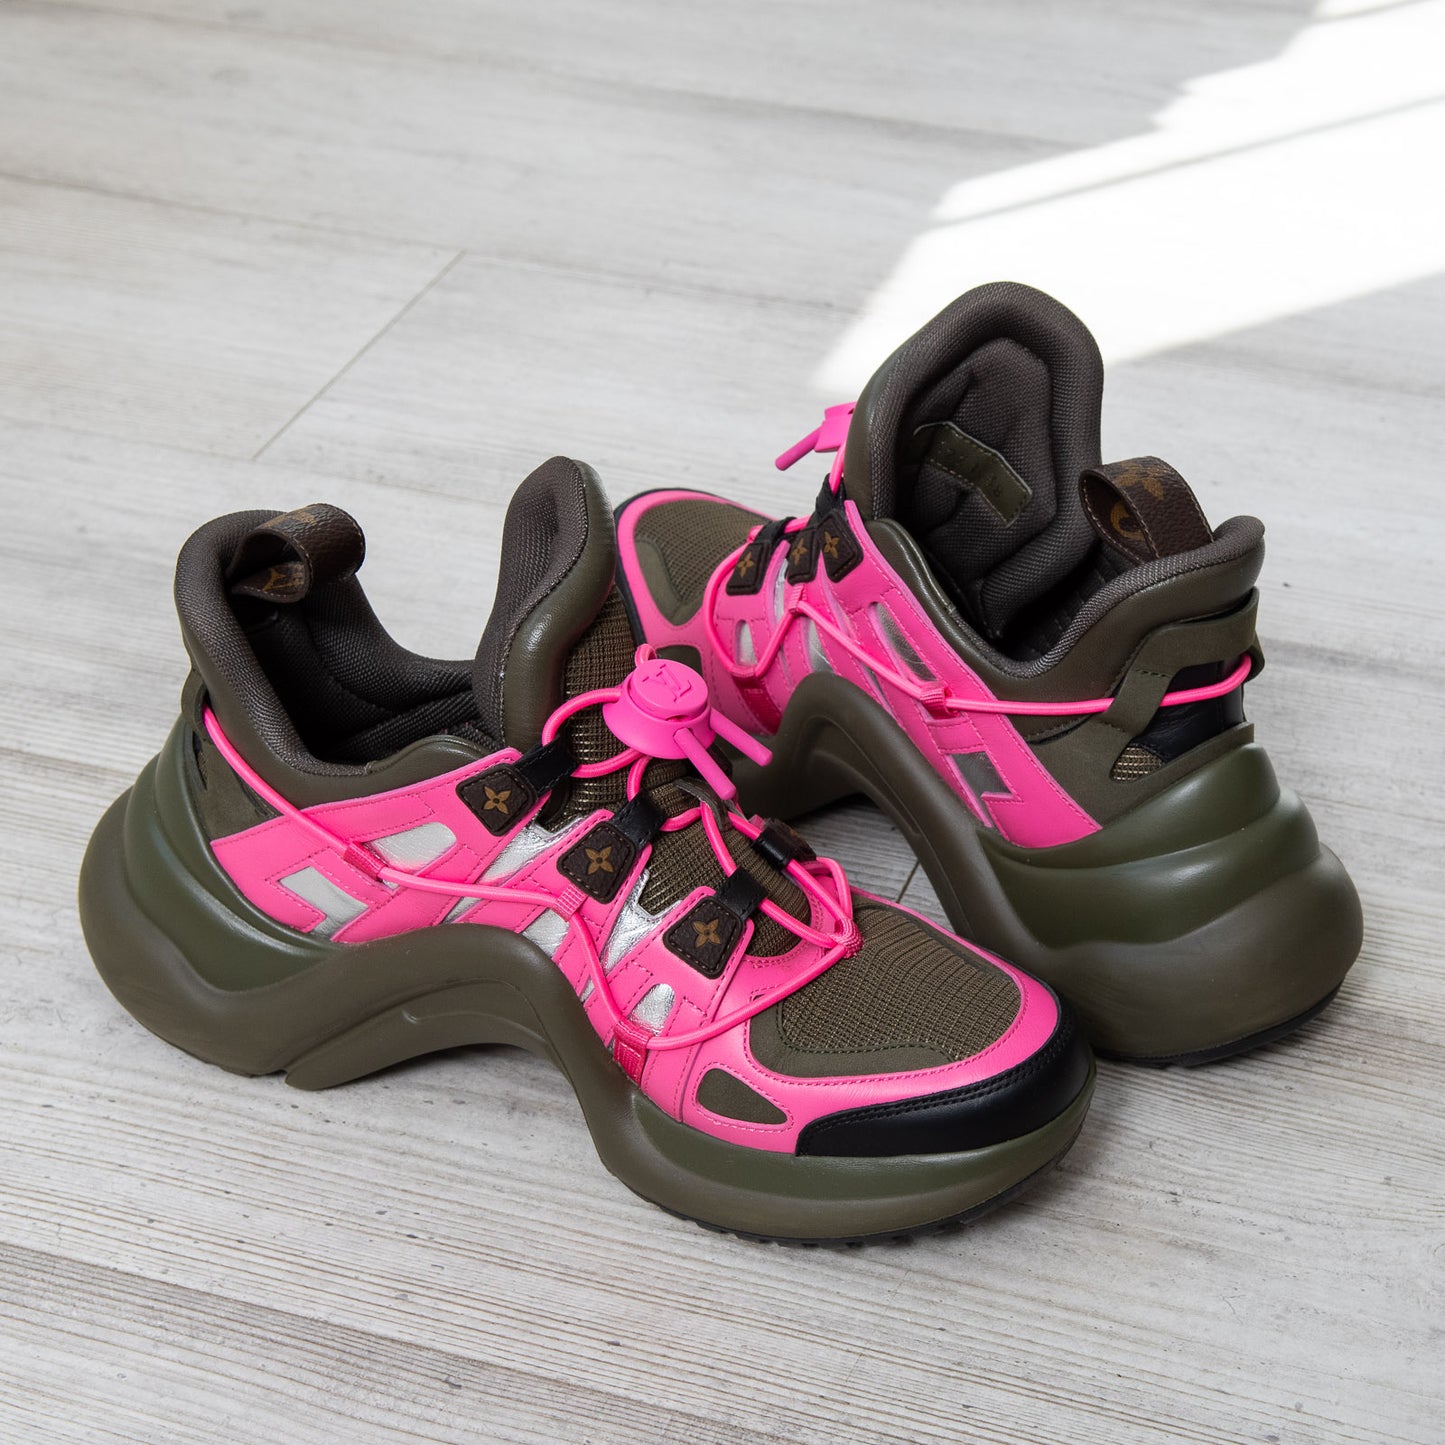 Louis Vuitton - LV Archlight Sneakers Trainers - Black - Women - Size: 38.0 - Luxury